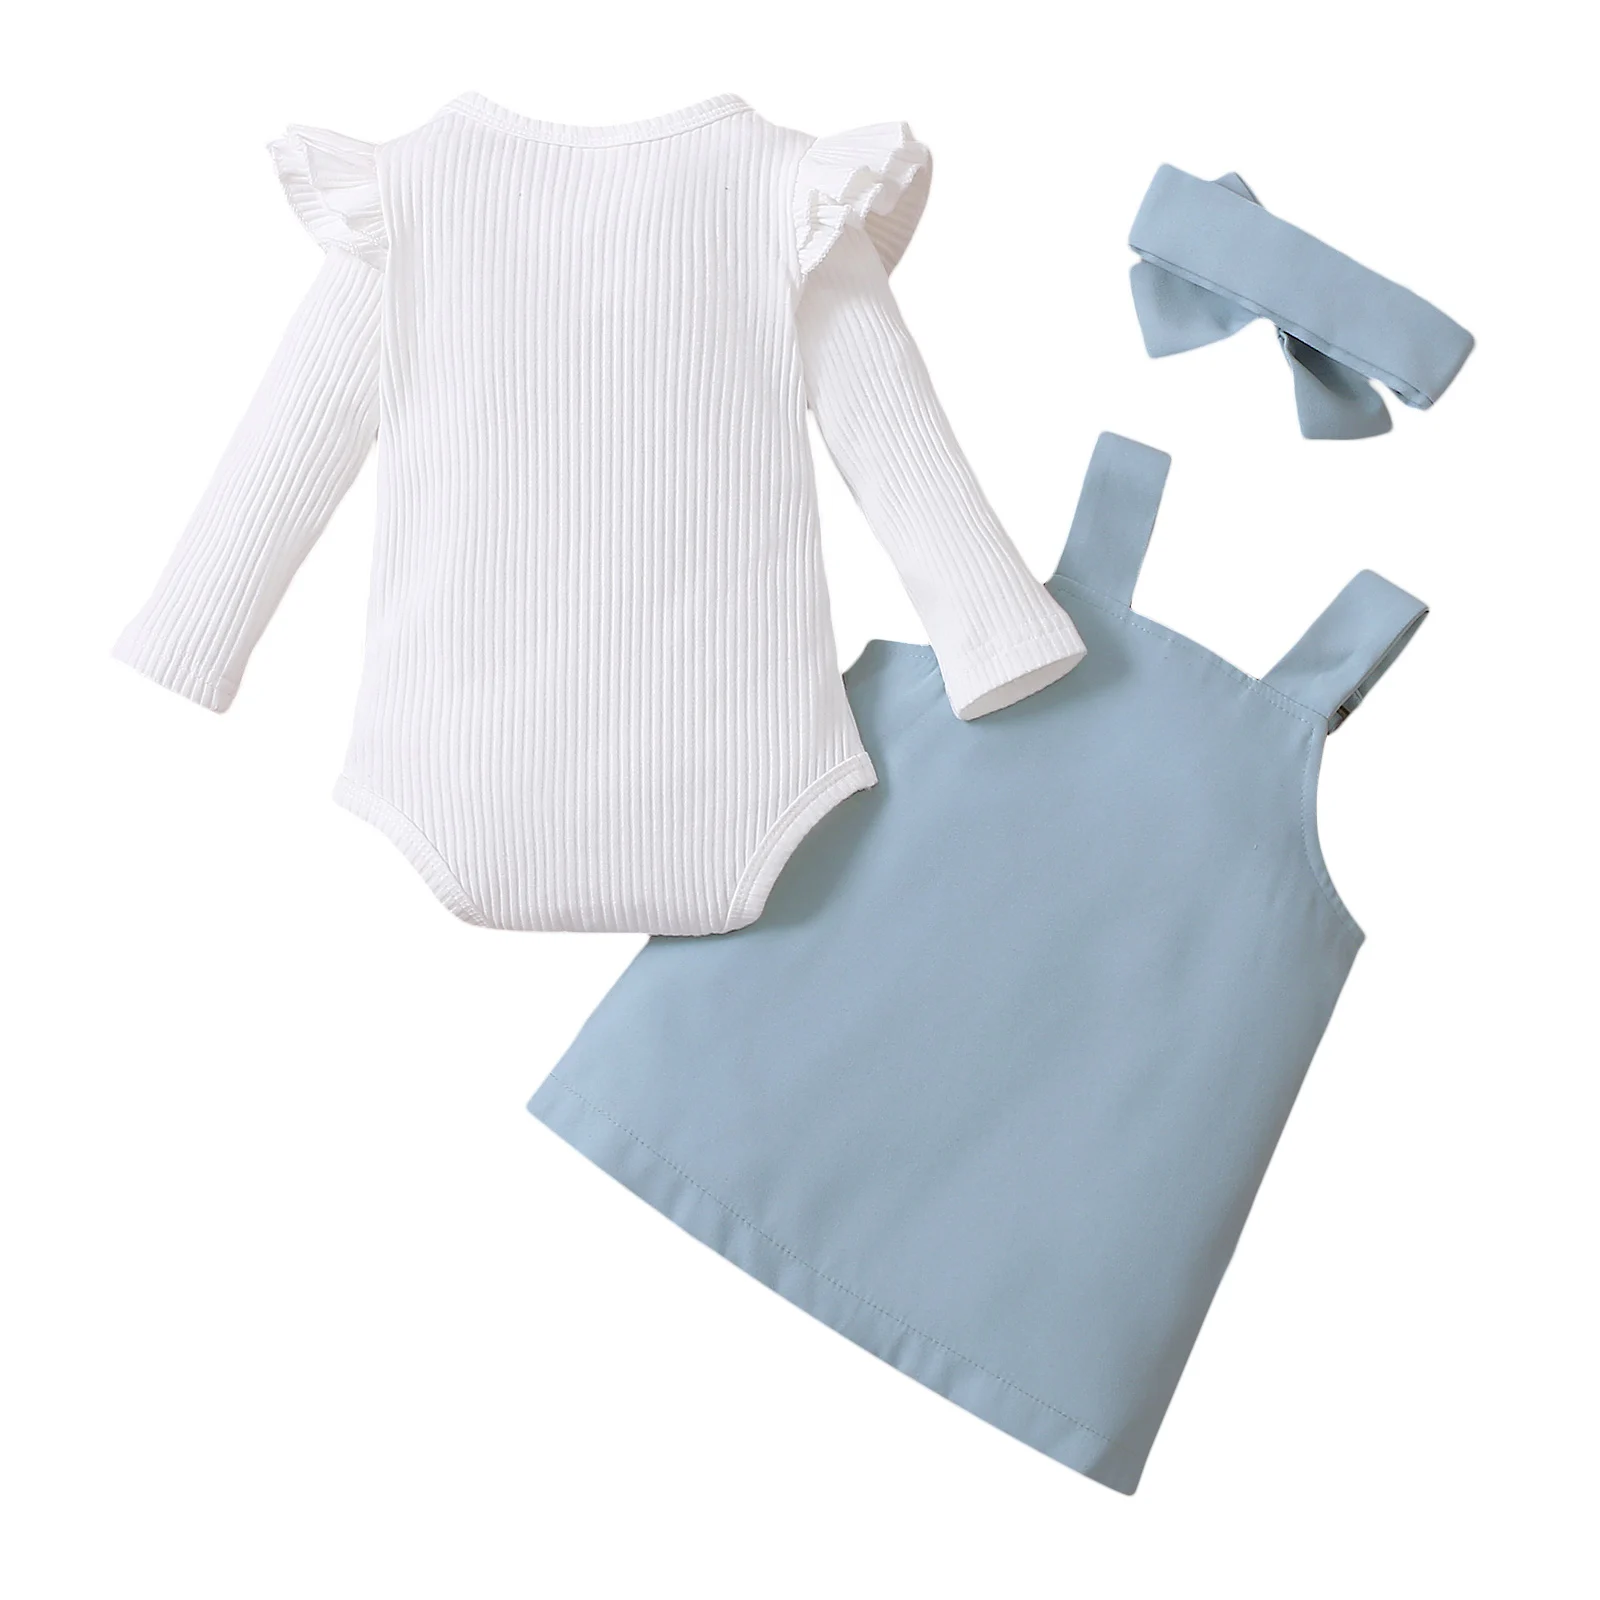 Newborn Baby Clothes Set 